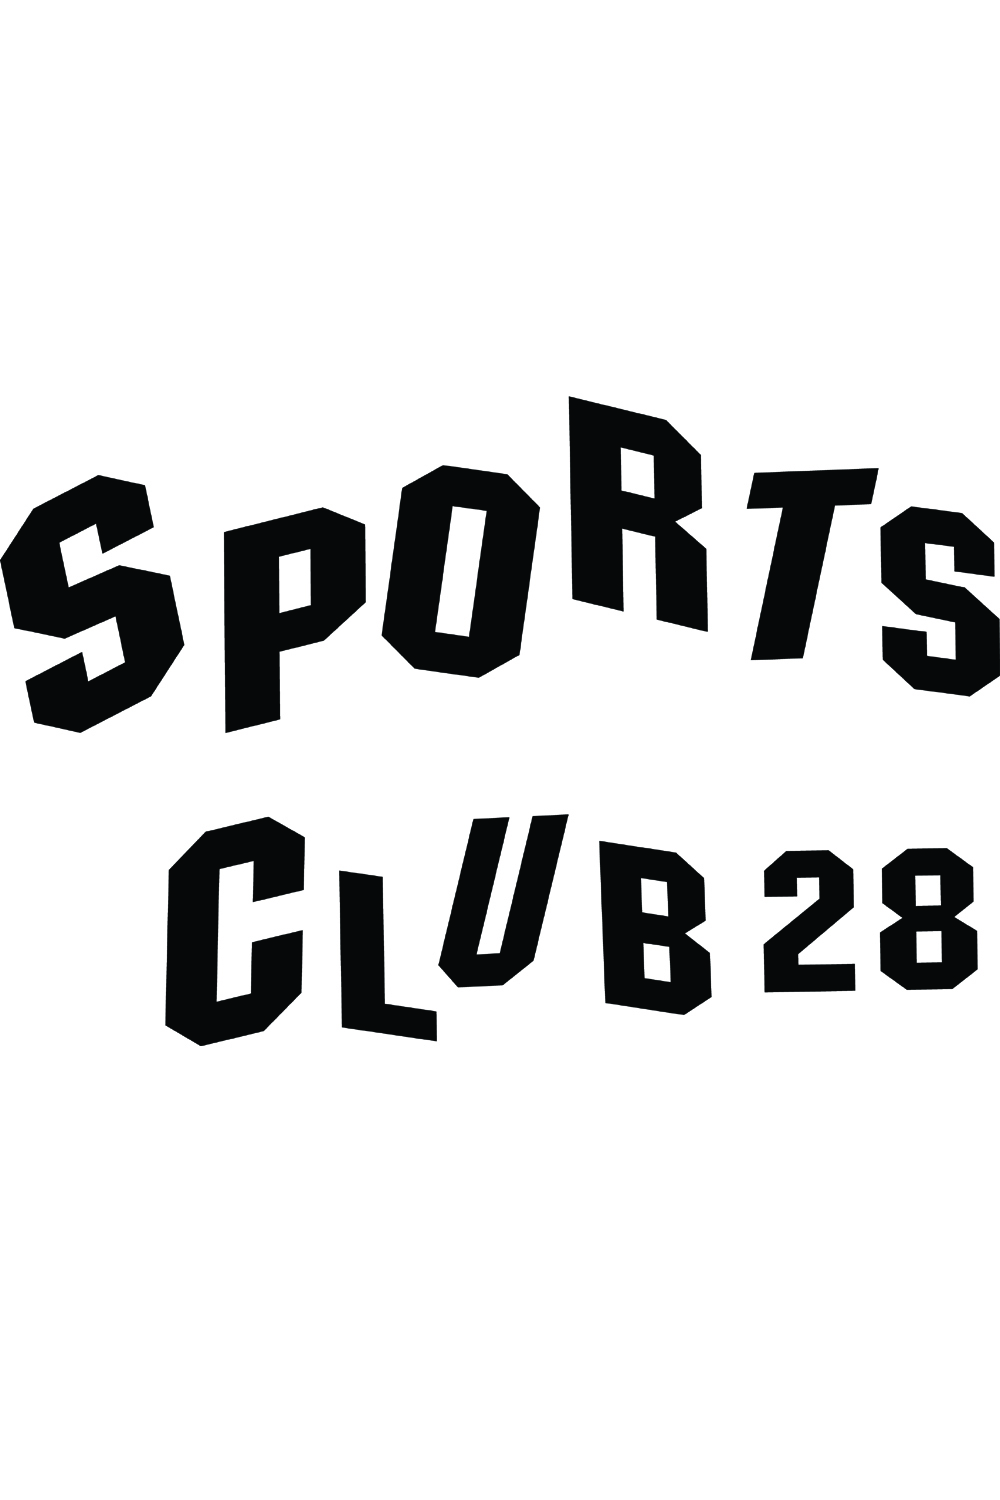 Sports Club 28 Club pinterest preview image.